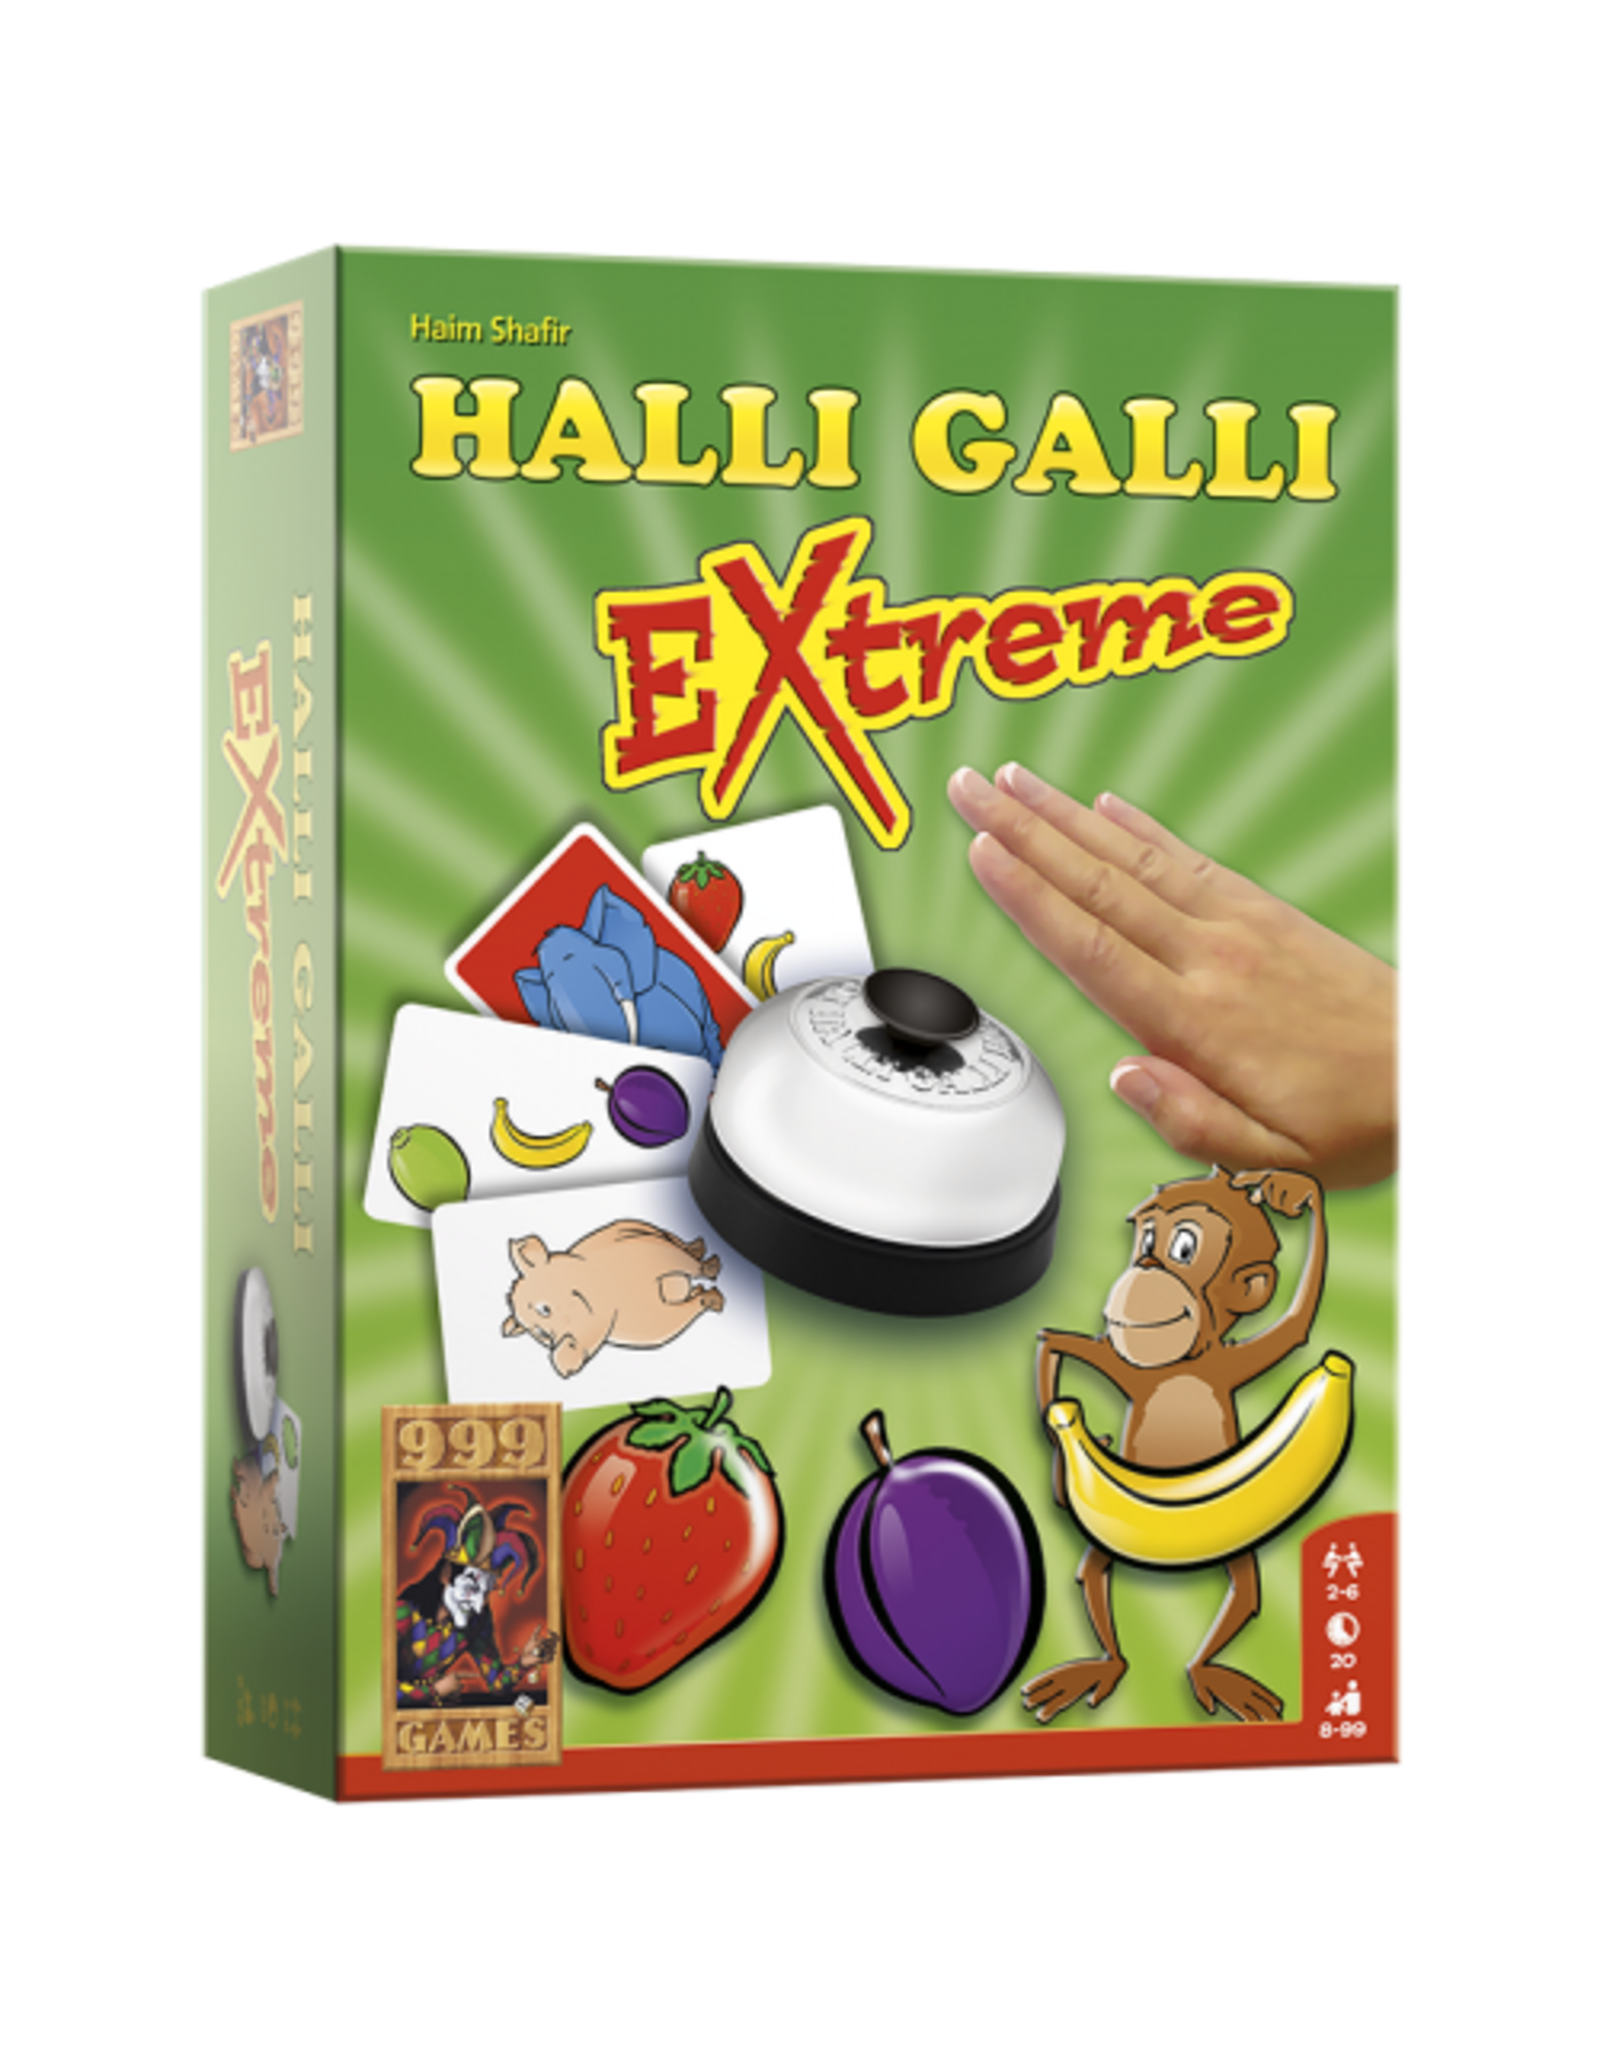 999 GAMES HALLI GALLI EXTREME*NL